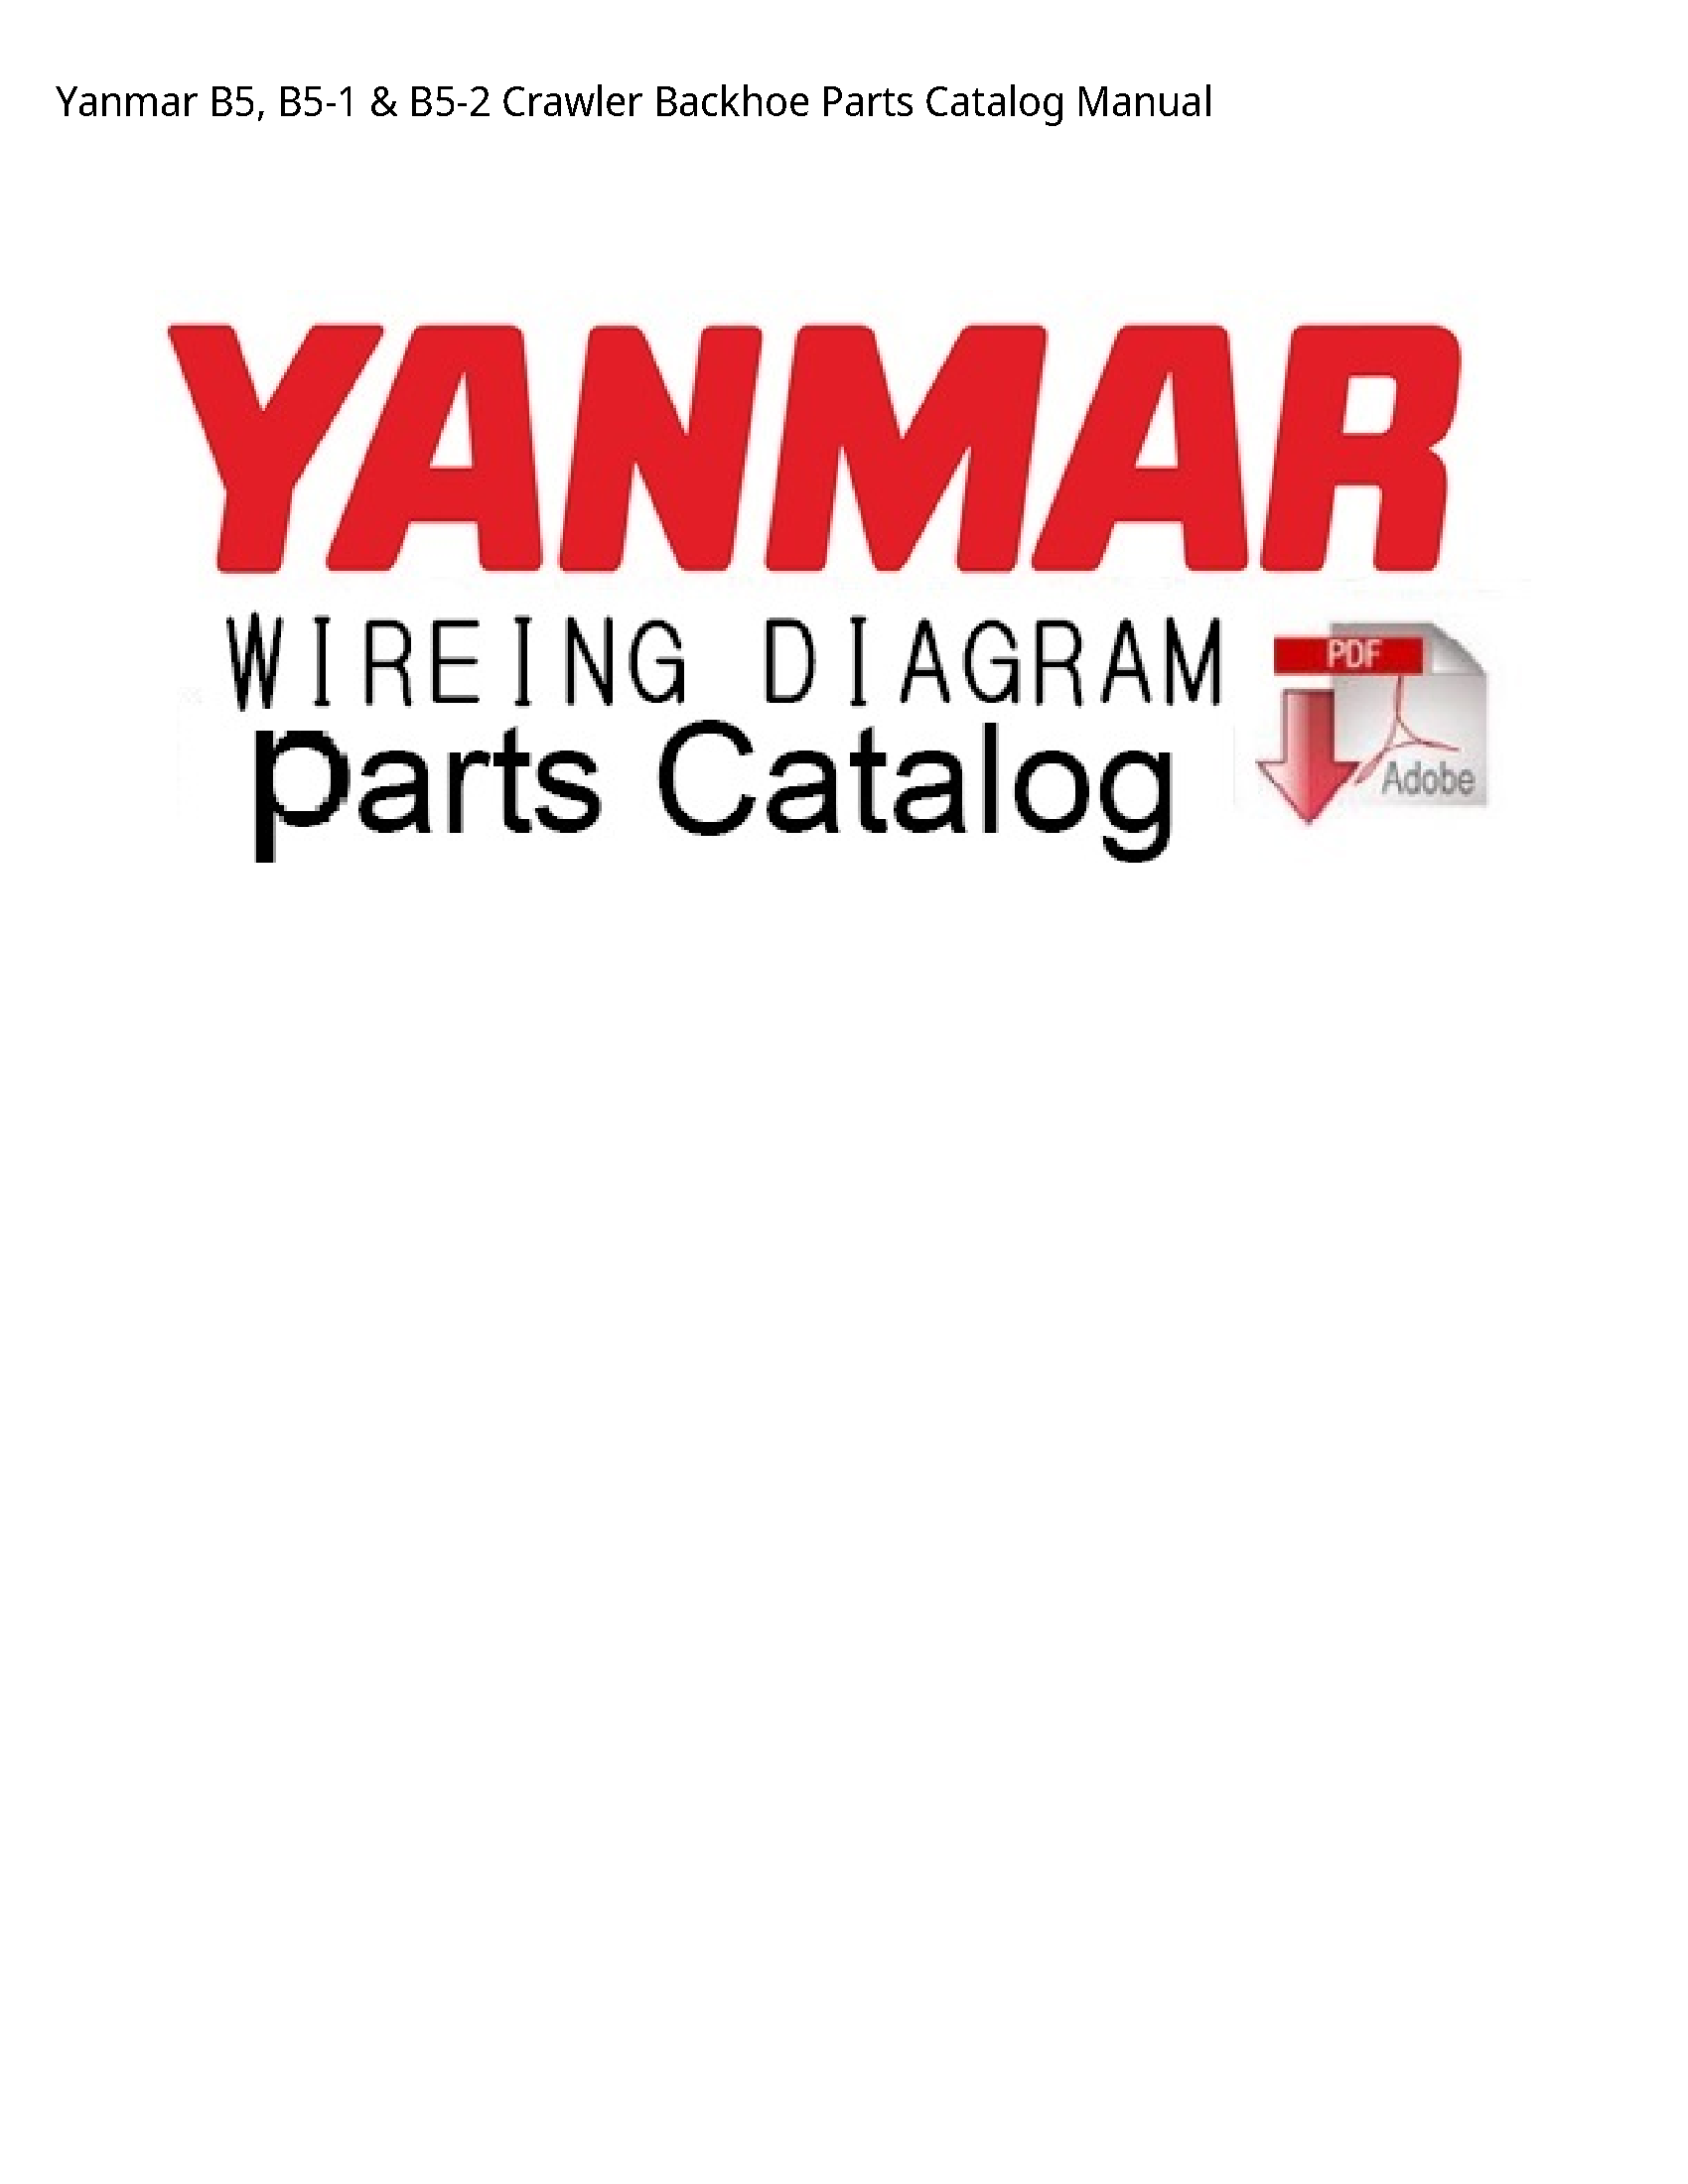 Yanmar B5 Crawler Backhoe Parts Catalog manual